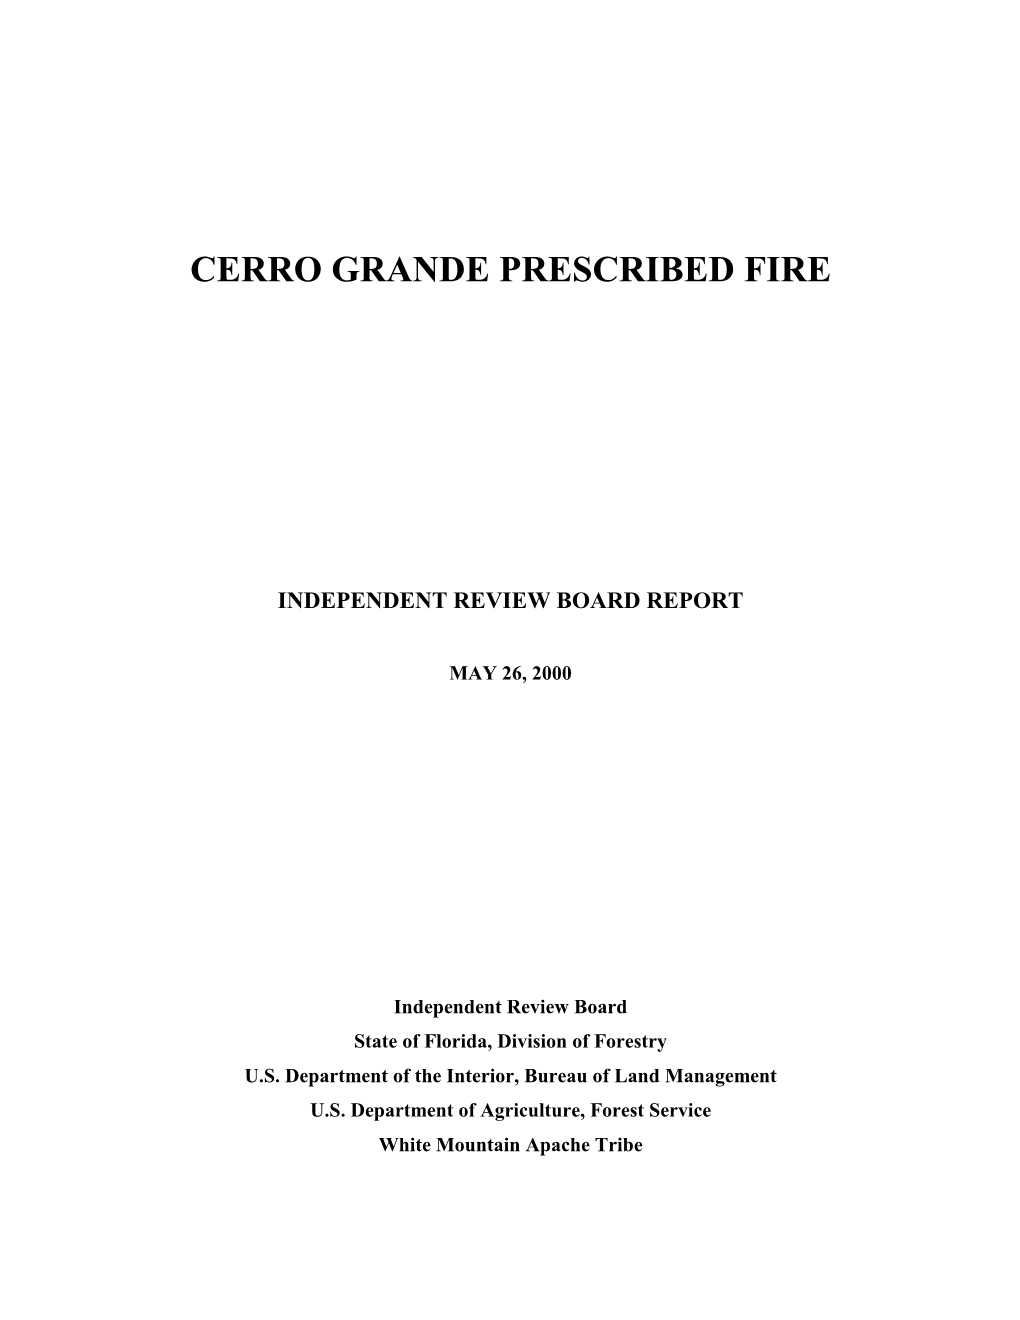 Cerro Grande Prescribed Fire